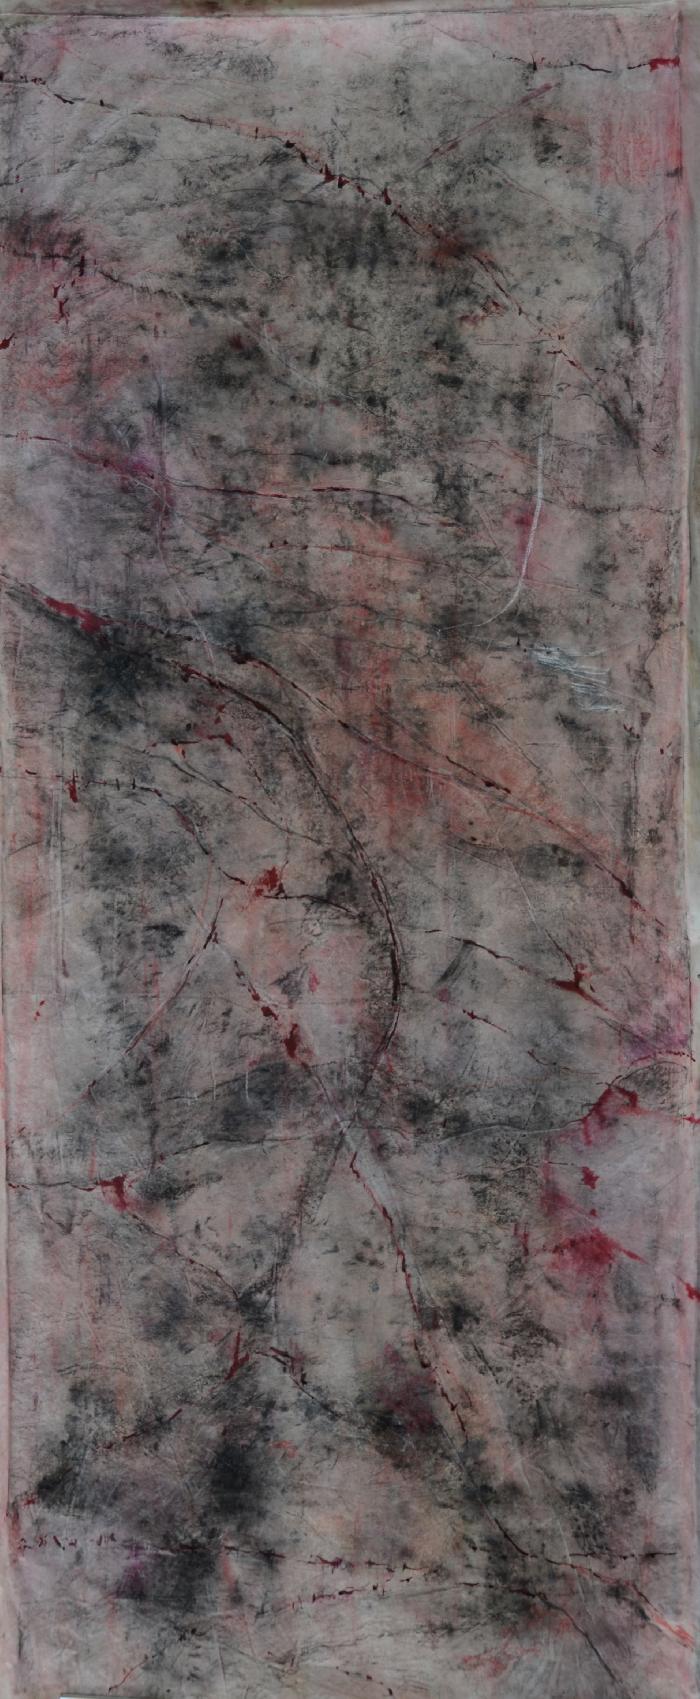 Graphiterre rose et noir 2009, inks, on canvas, 50x150cm. 